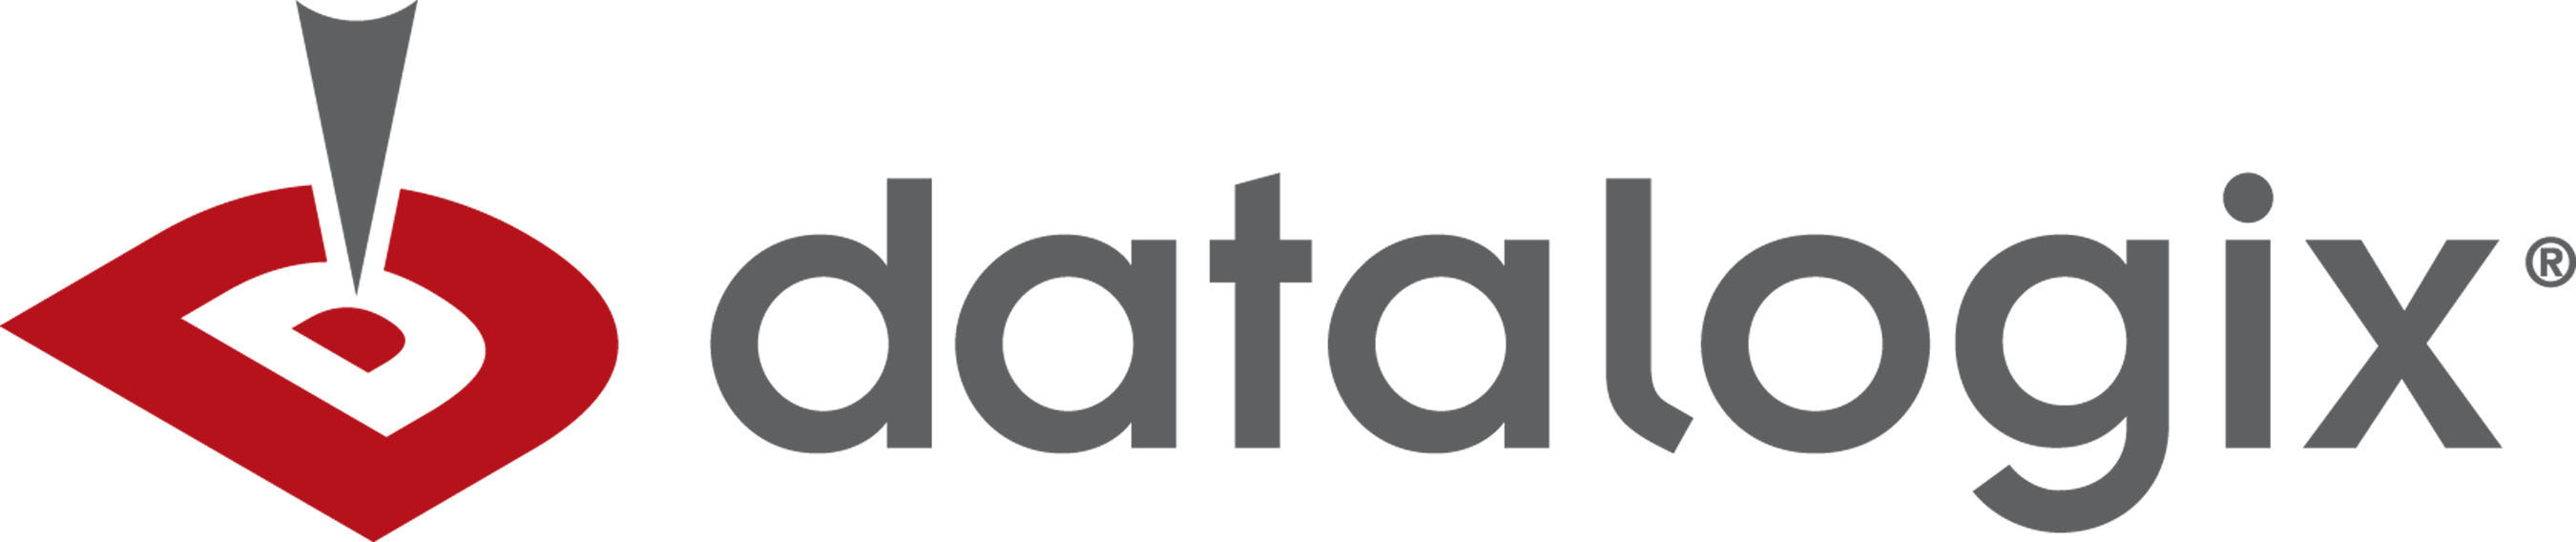 Datalogix logo. (PRNewsFoto/Datalogix) (PRNewsFoto/DATALOGIX)